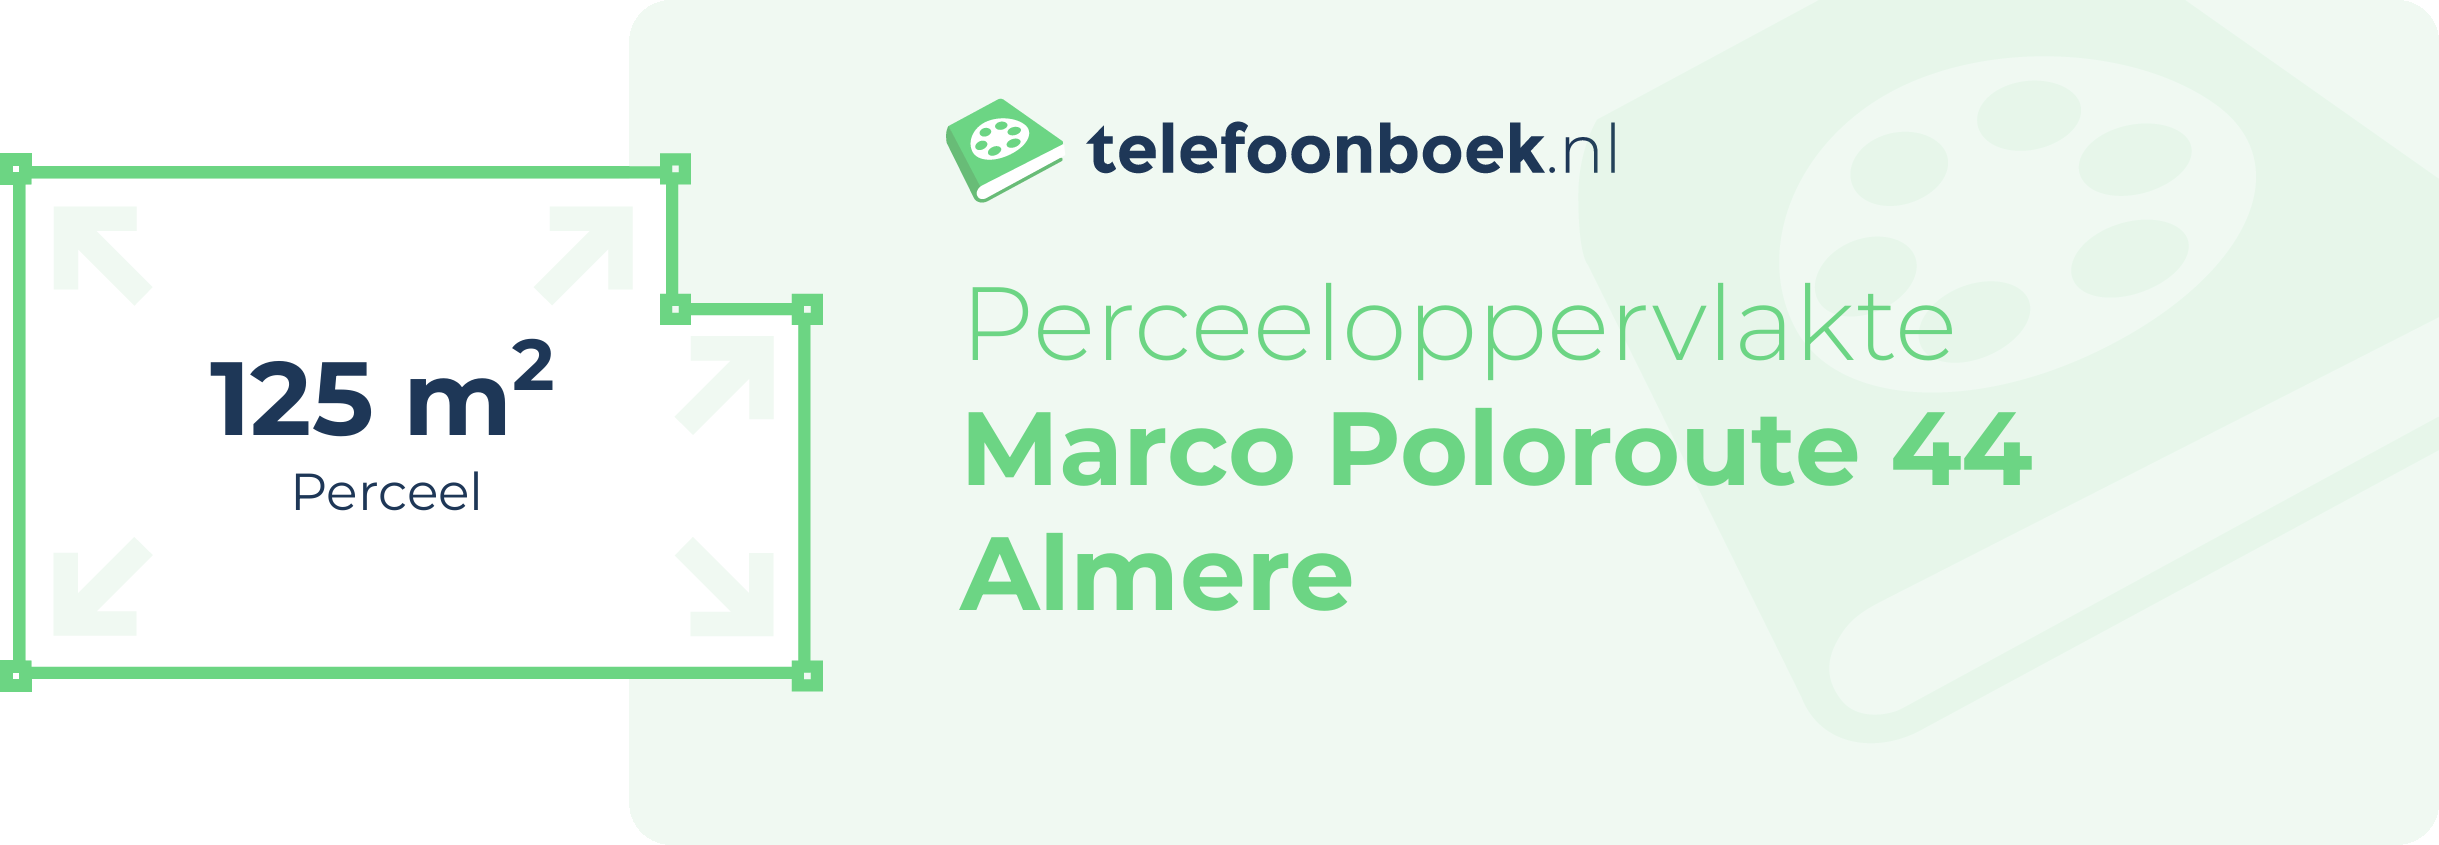 Perceeloppervlakte Marco Poloroute 44 Almere